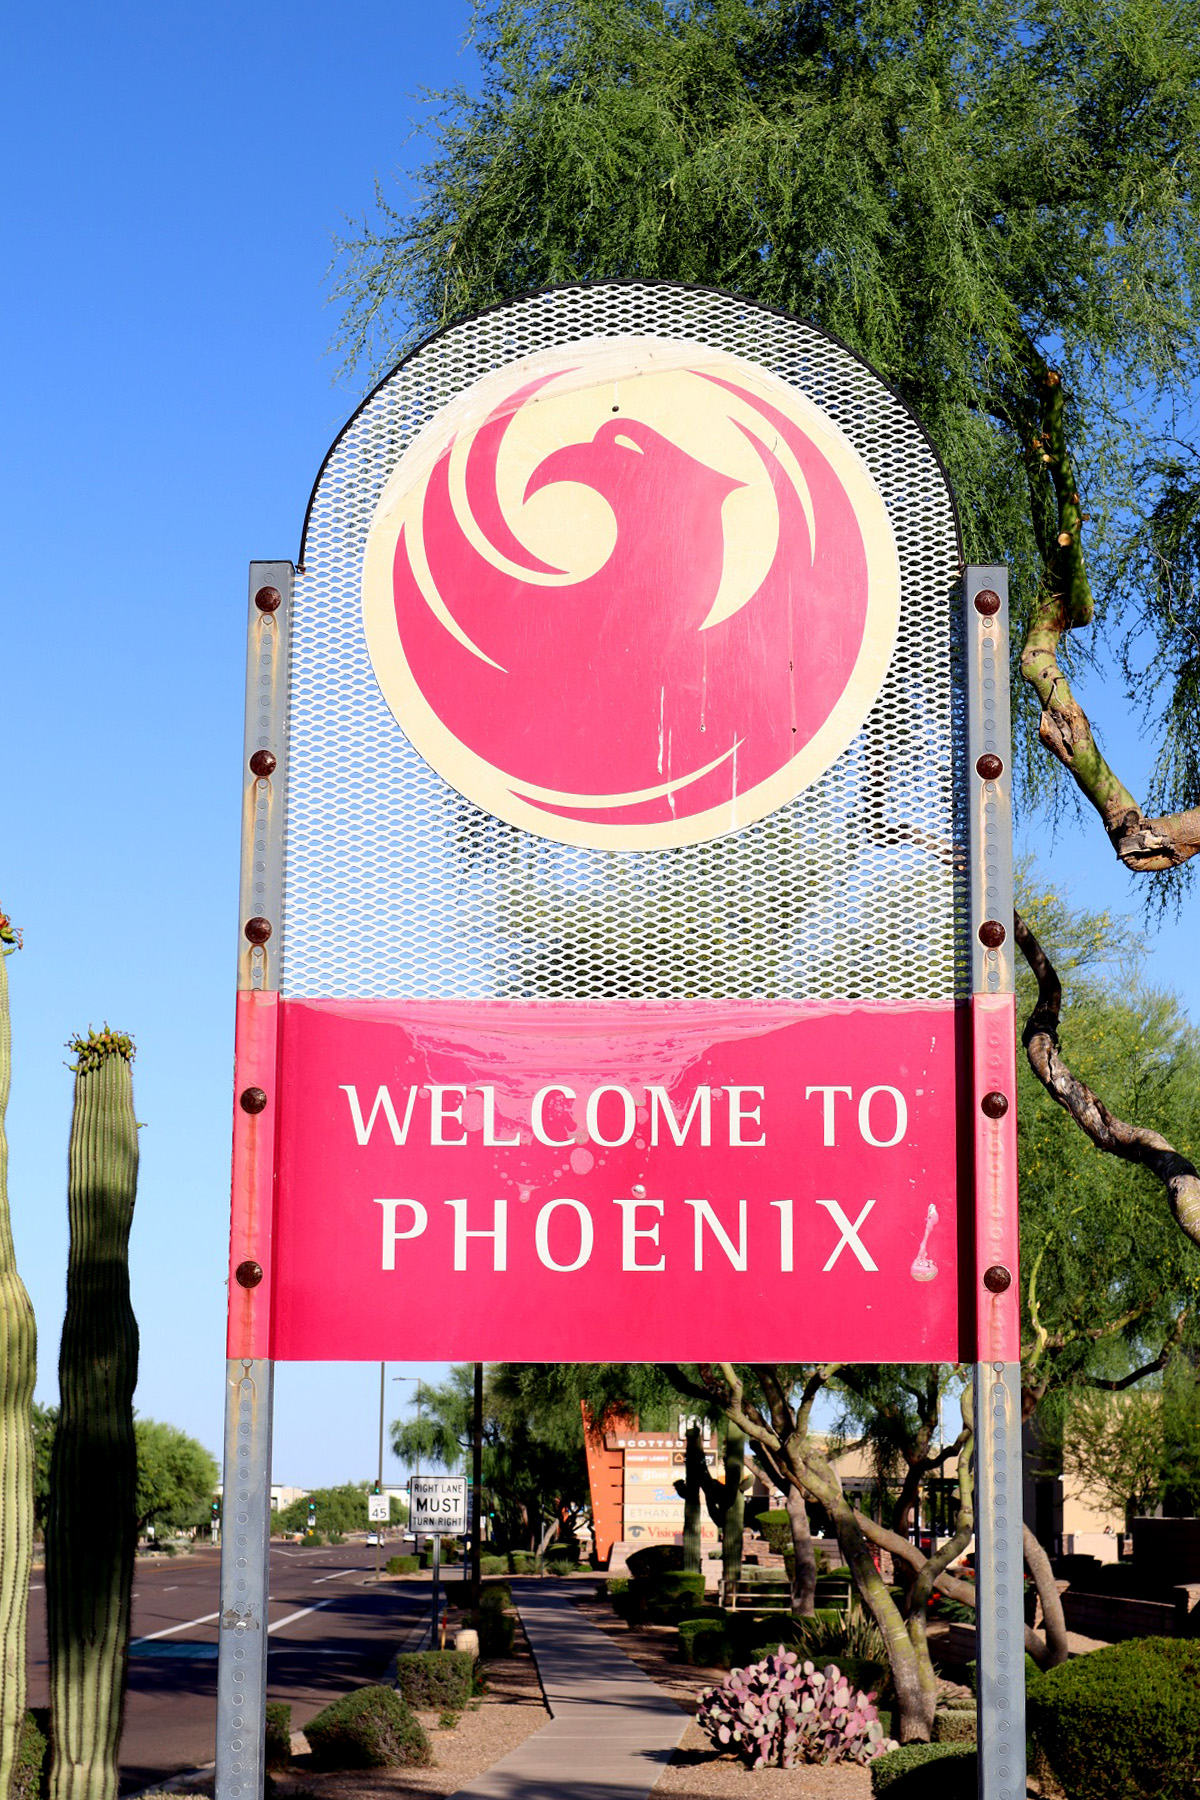 A sign for Phoenix, Arizona